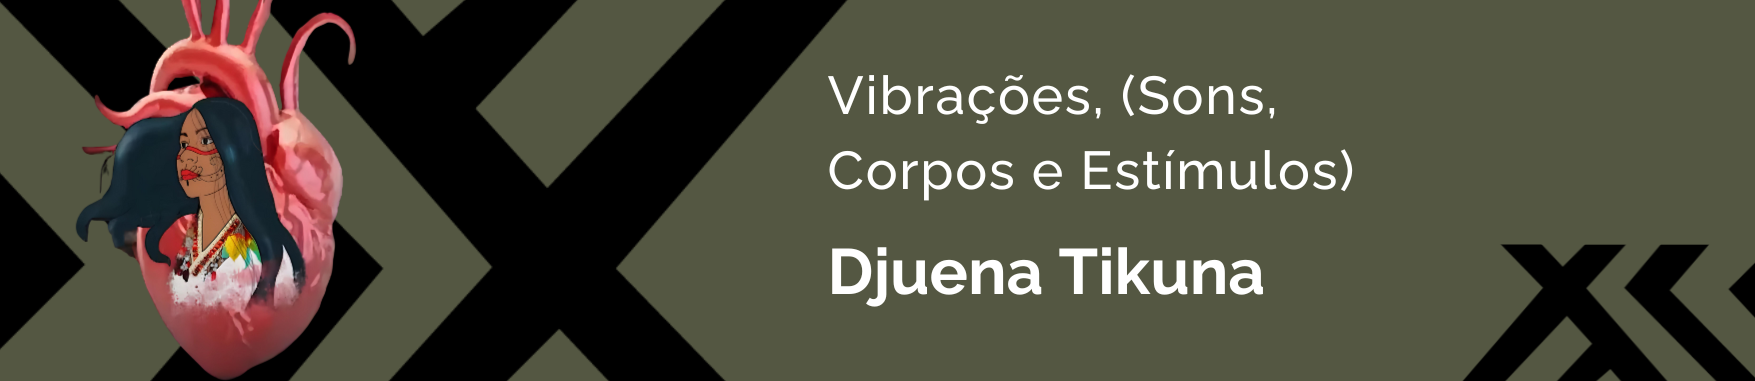 Banner da sessão Djuena Tikuna